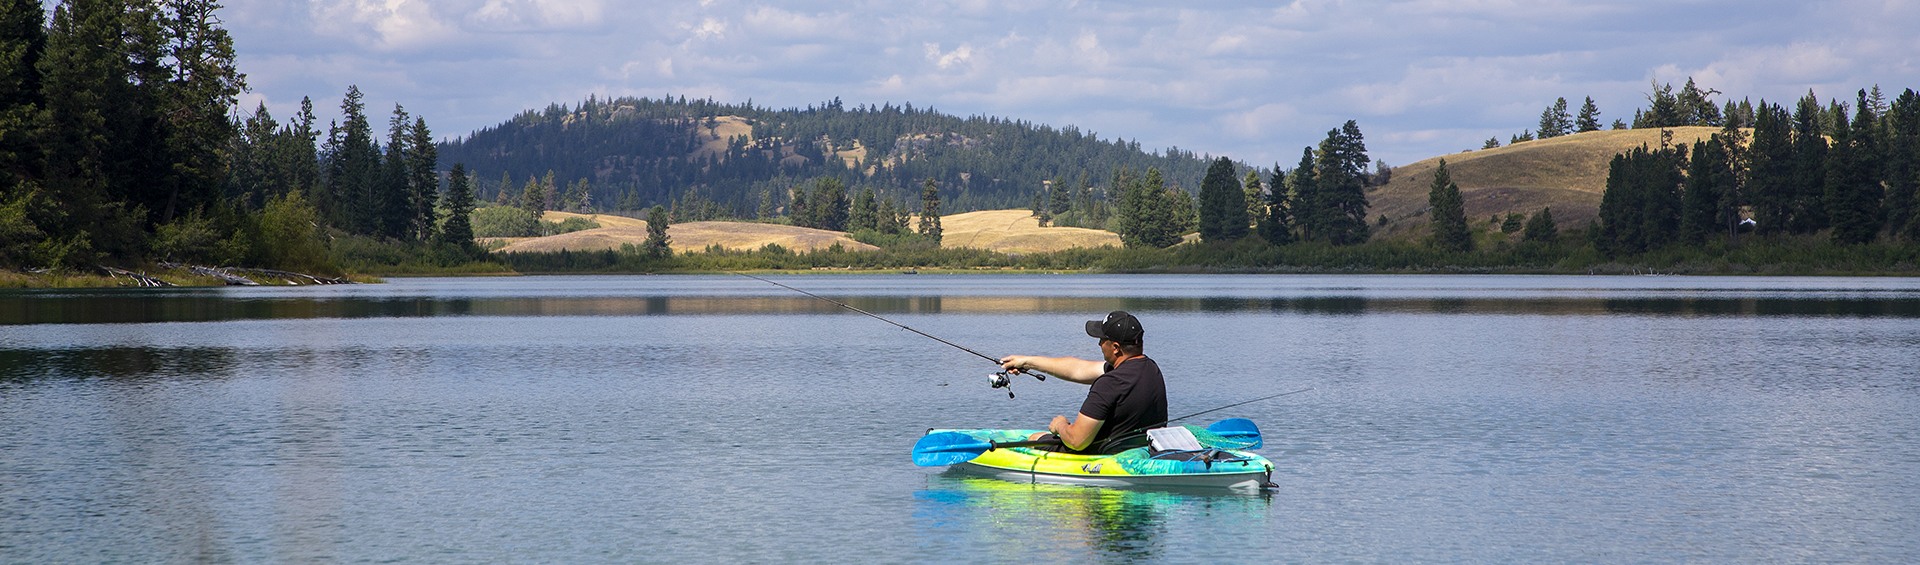 Fishing 533, Kentucky Alleyne Provincial Park, near Princeton, Similkameen, summer, activities, Darren Robinson